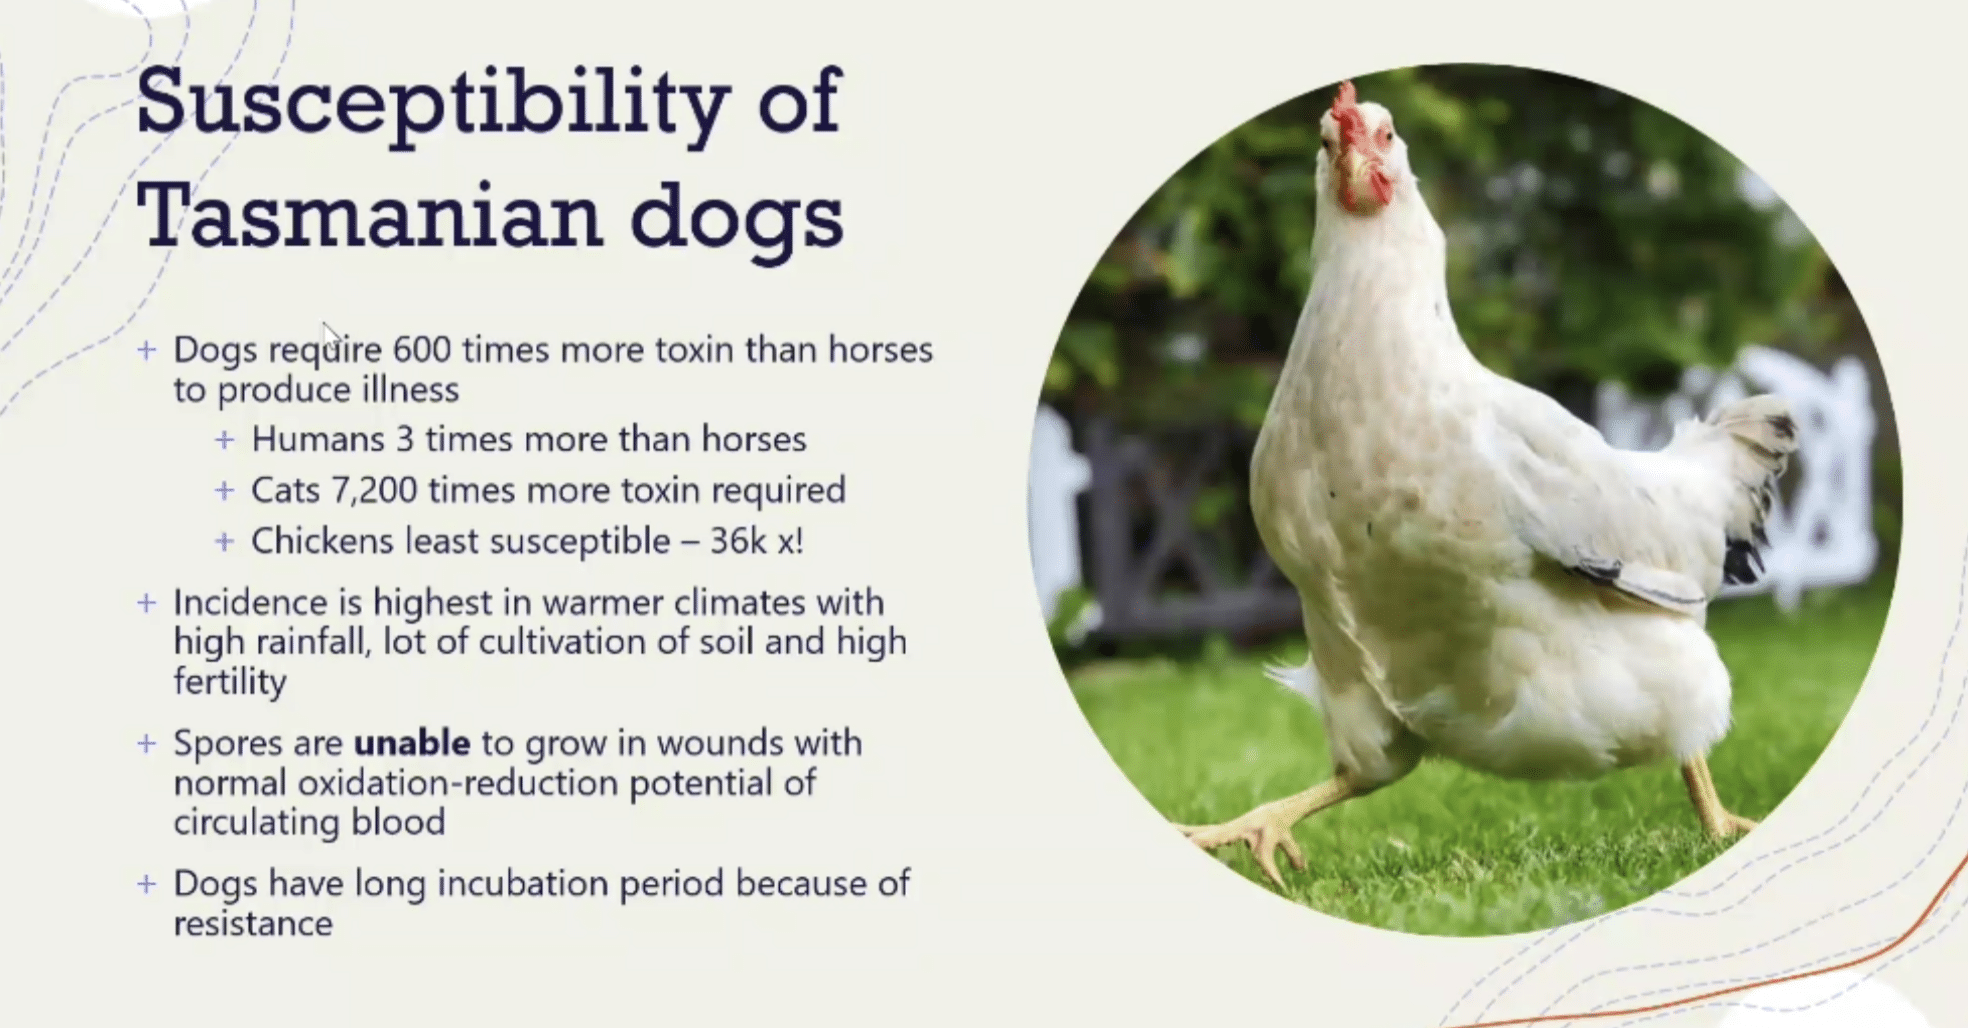 Susceptibility of Tasmanian dogs